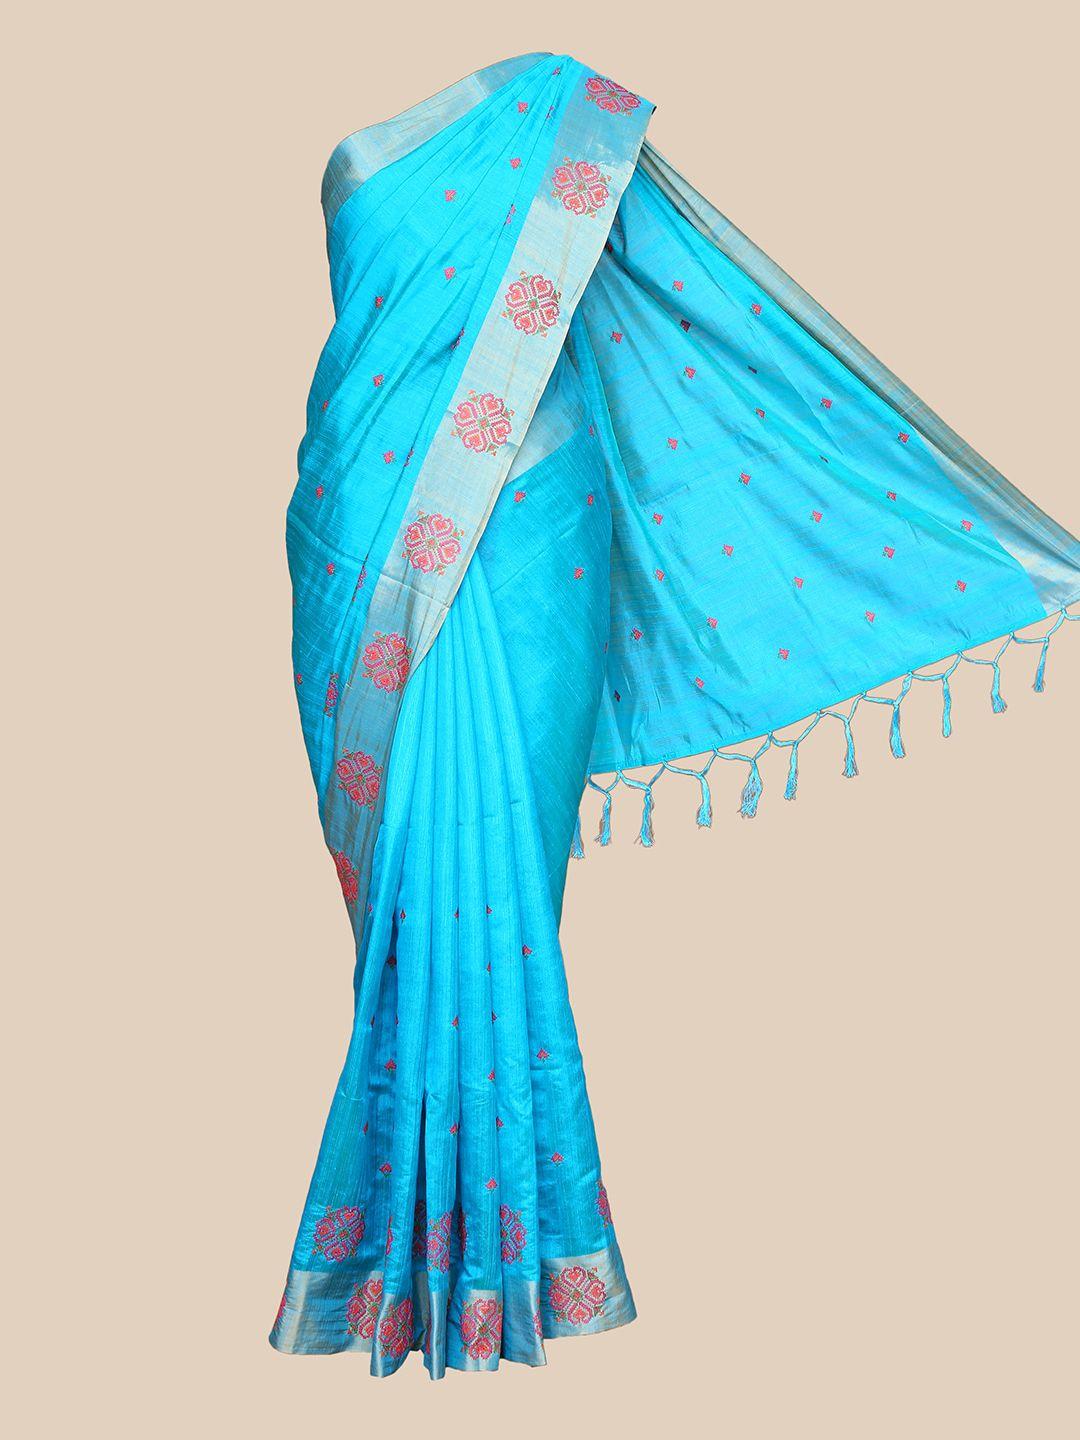 the-chennai-silks-blue-&-pink-ethnic-motifs-embroidered-saree